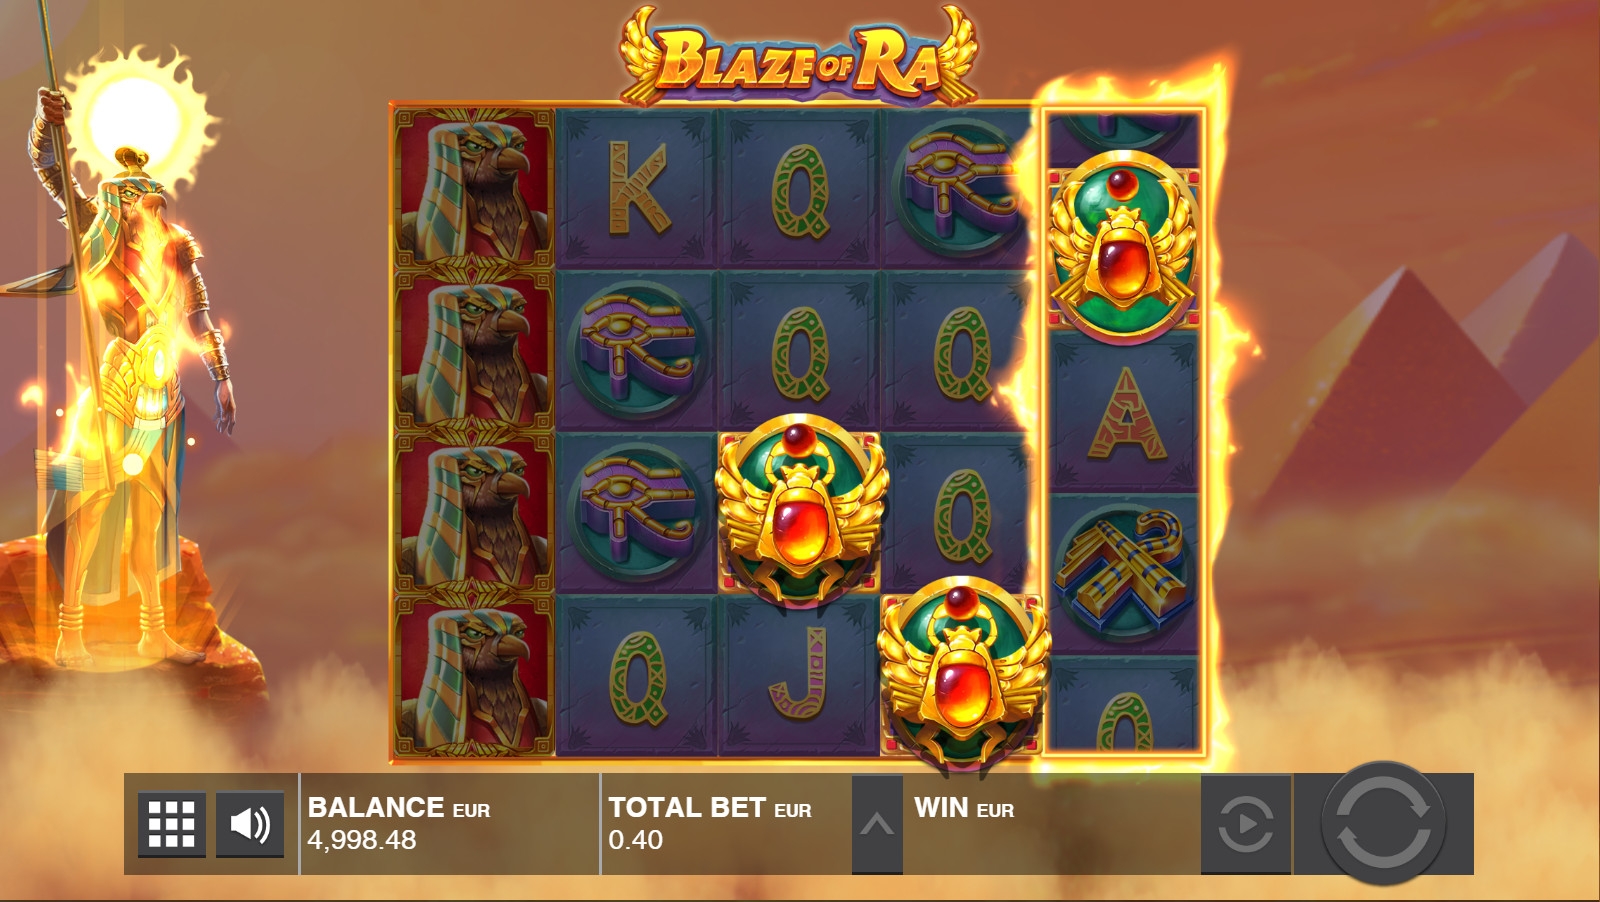 Blaze of Ra (Blaze of Ra) from category Slots